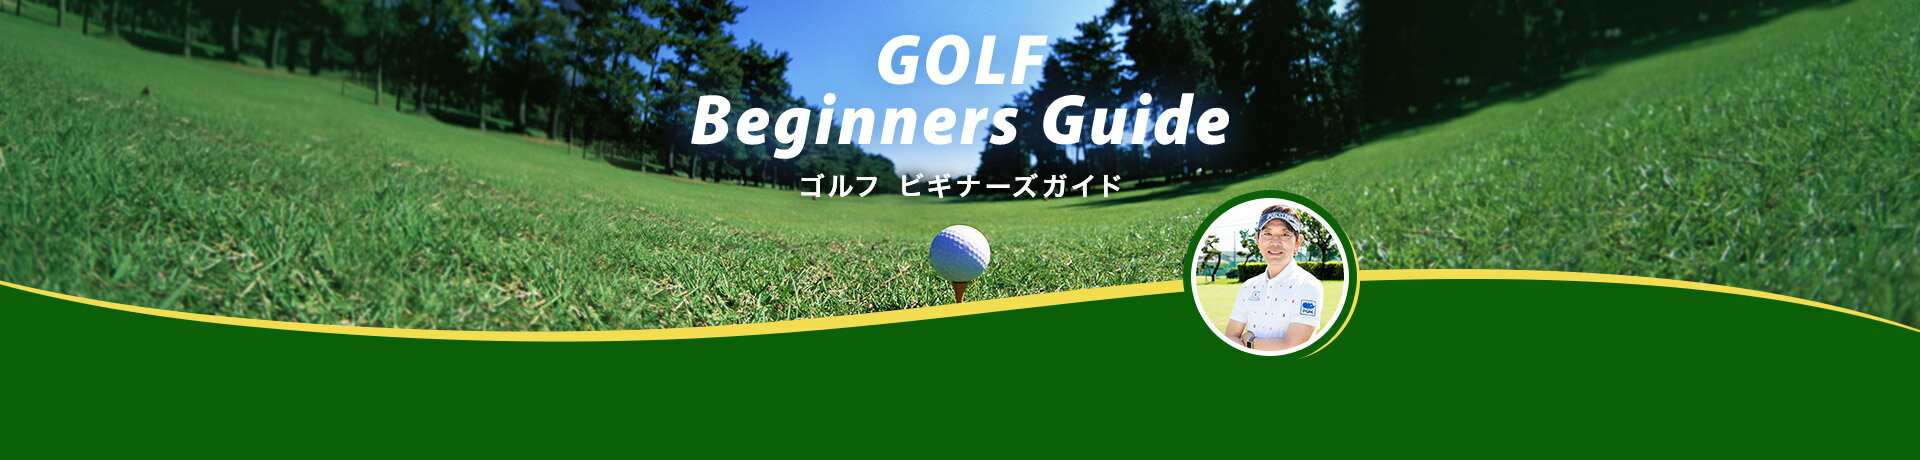 GOLF Beginners Guide | ゴルフ ビギナーズガイド